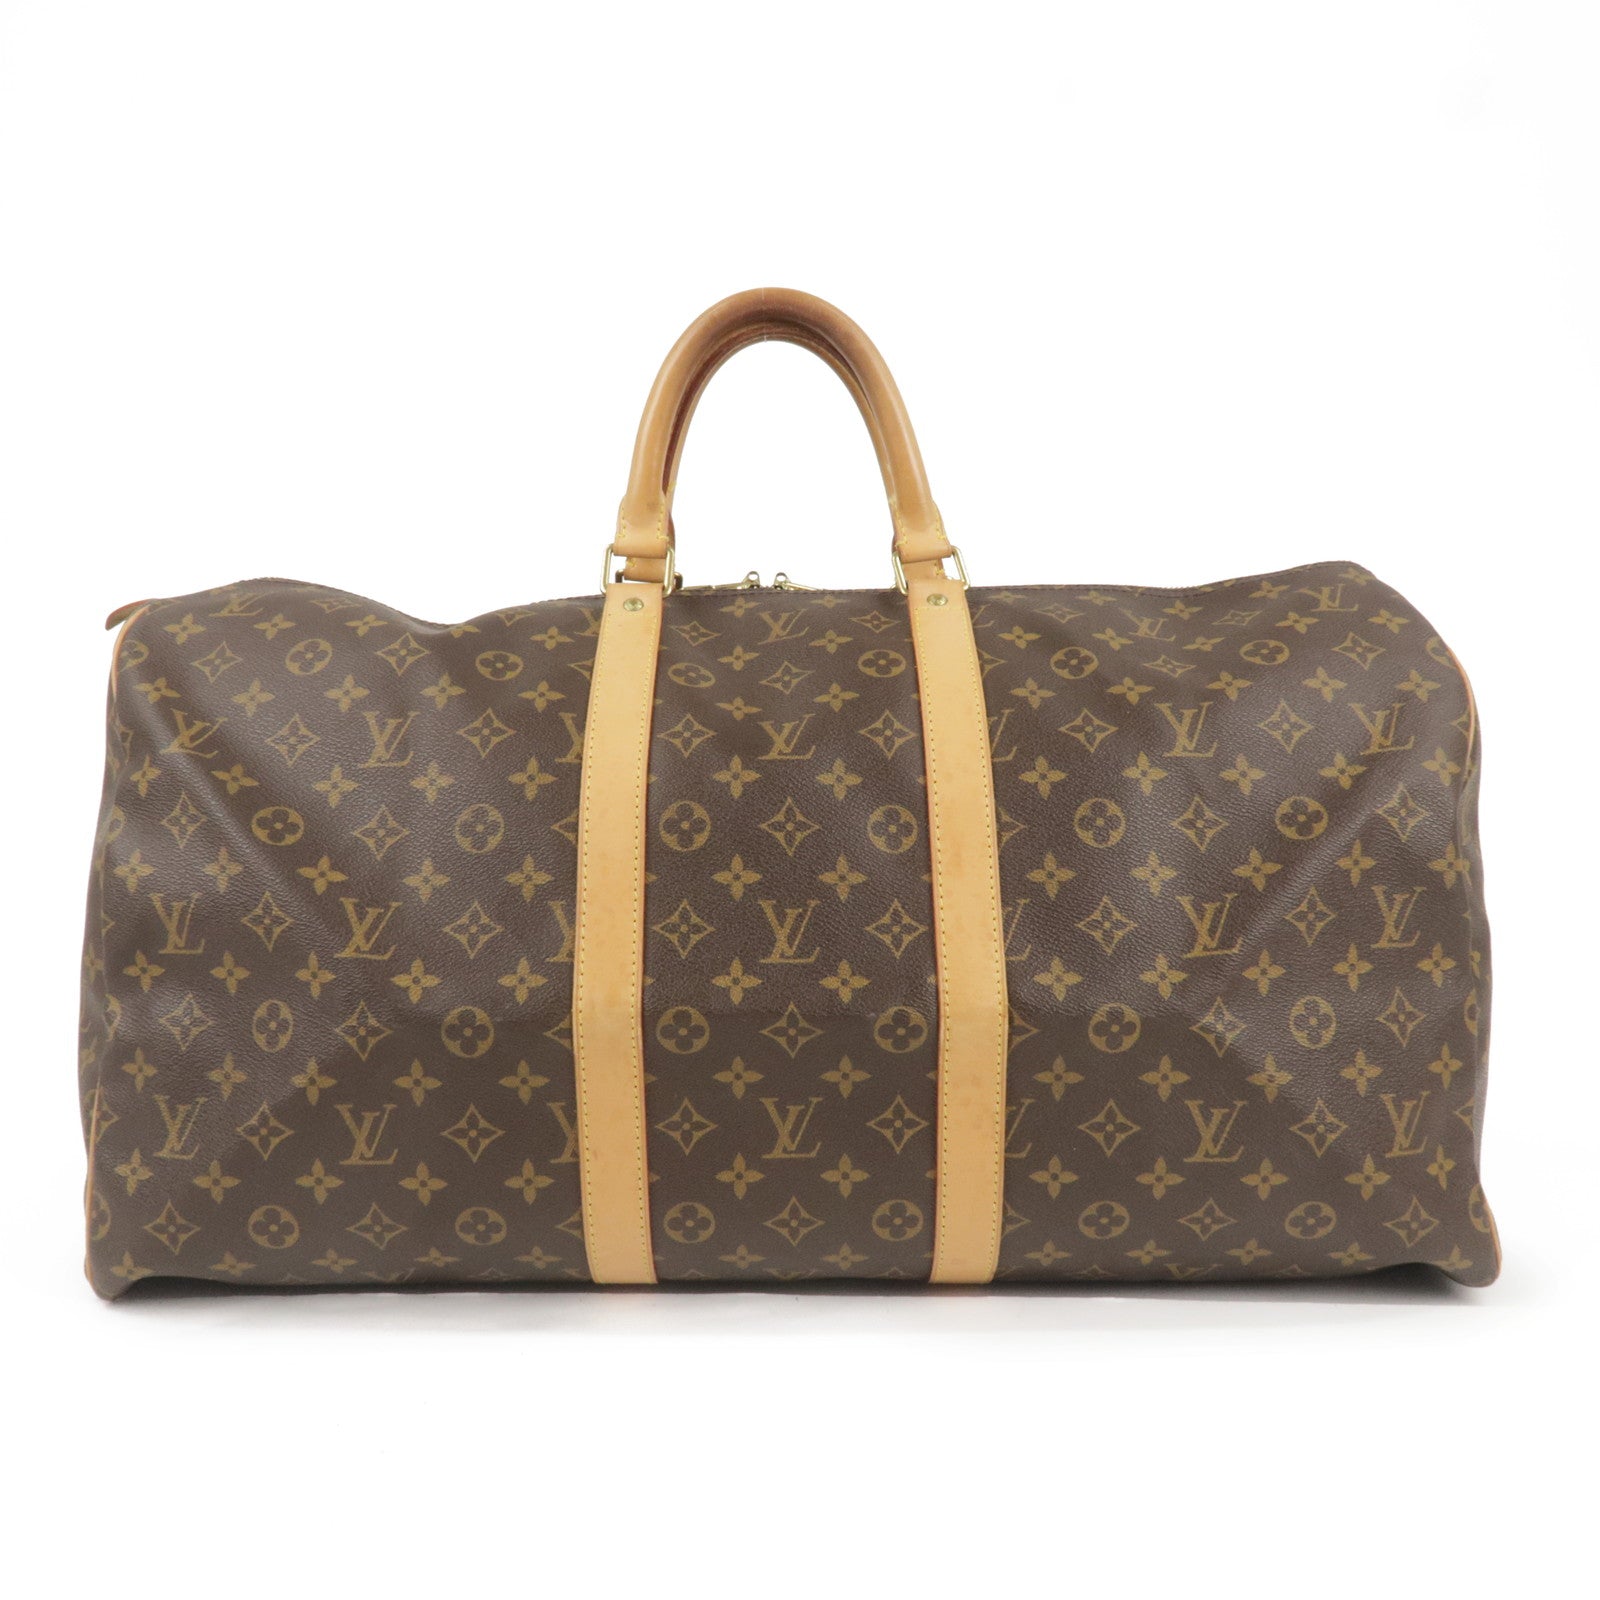 Used Leather Authentic Louis Vuitton Handbag